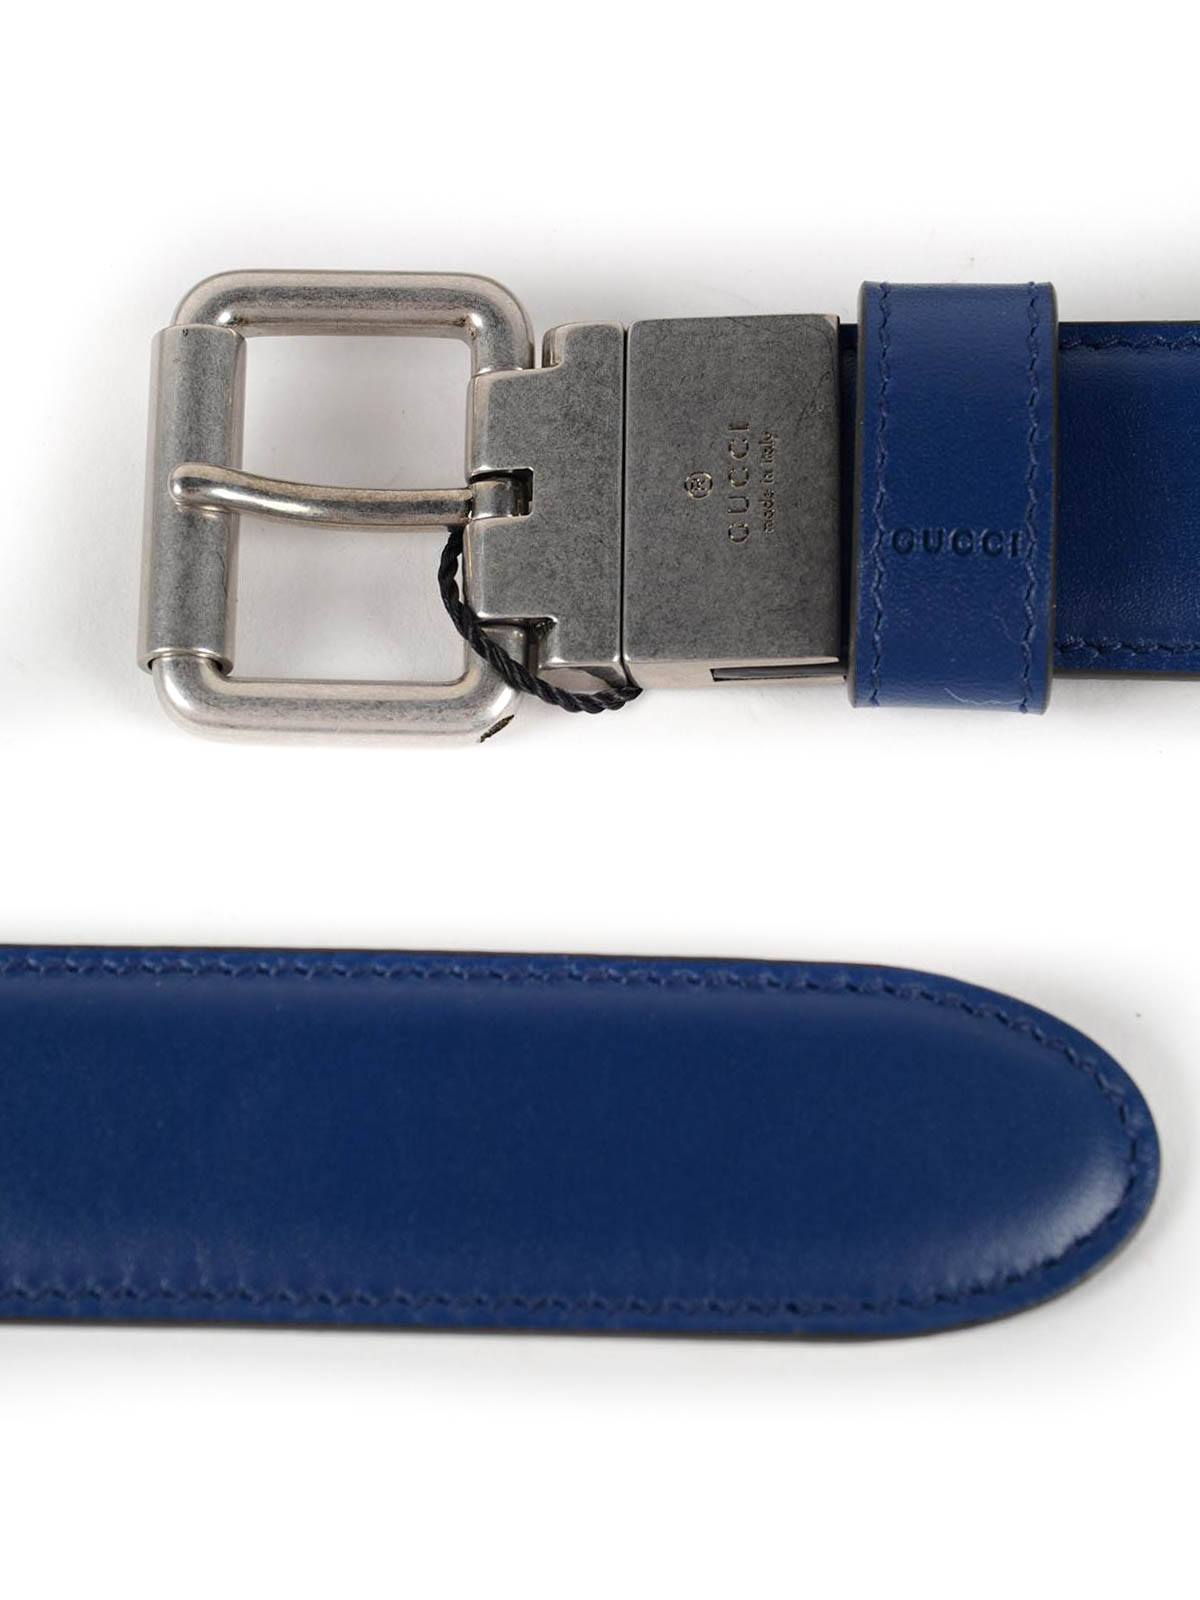 Gucci Navy Blue Leather Gg Belt